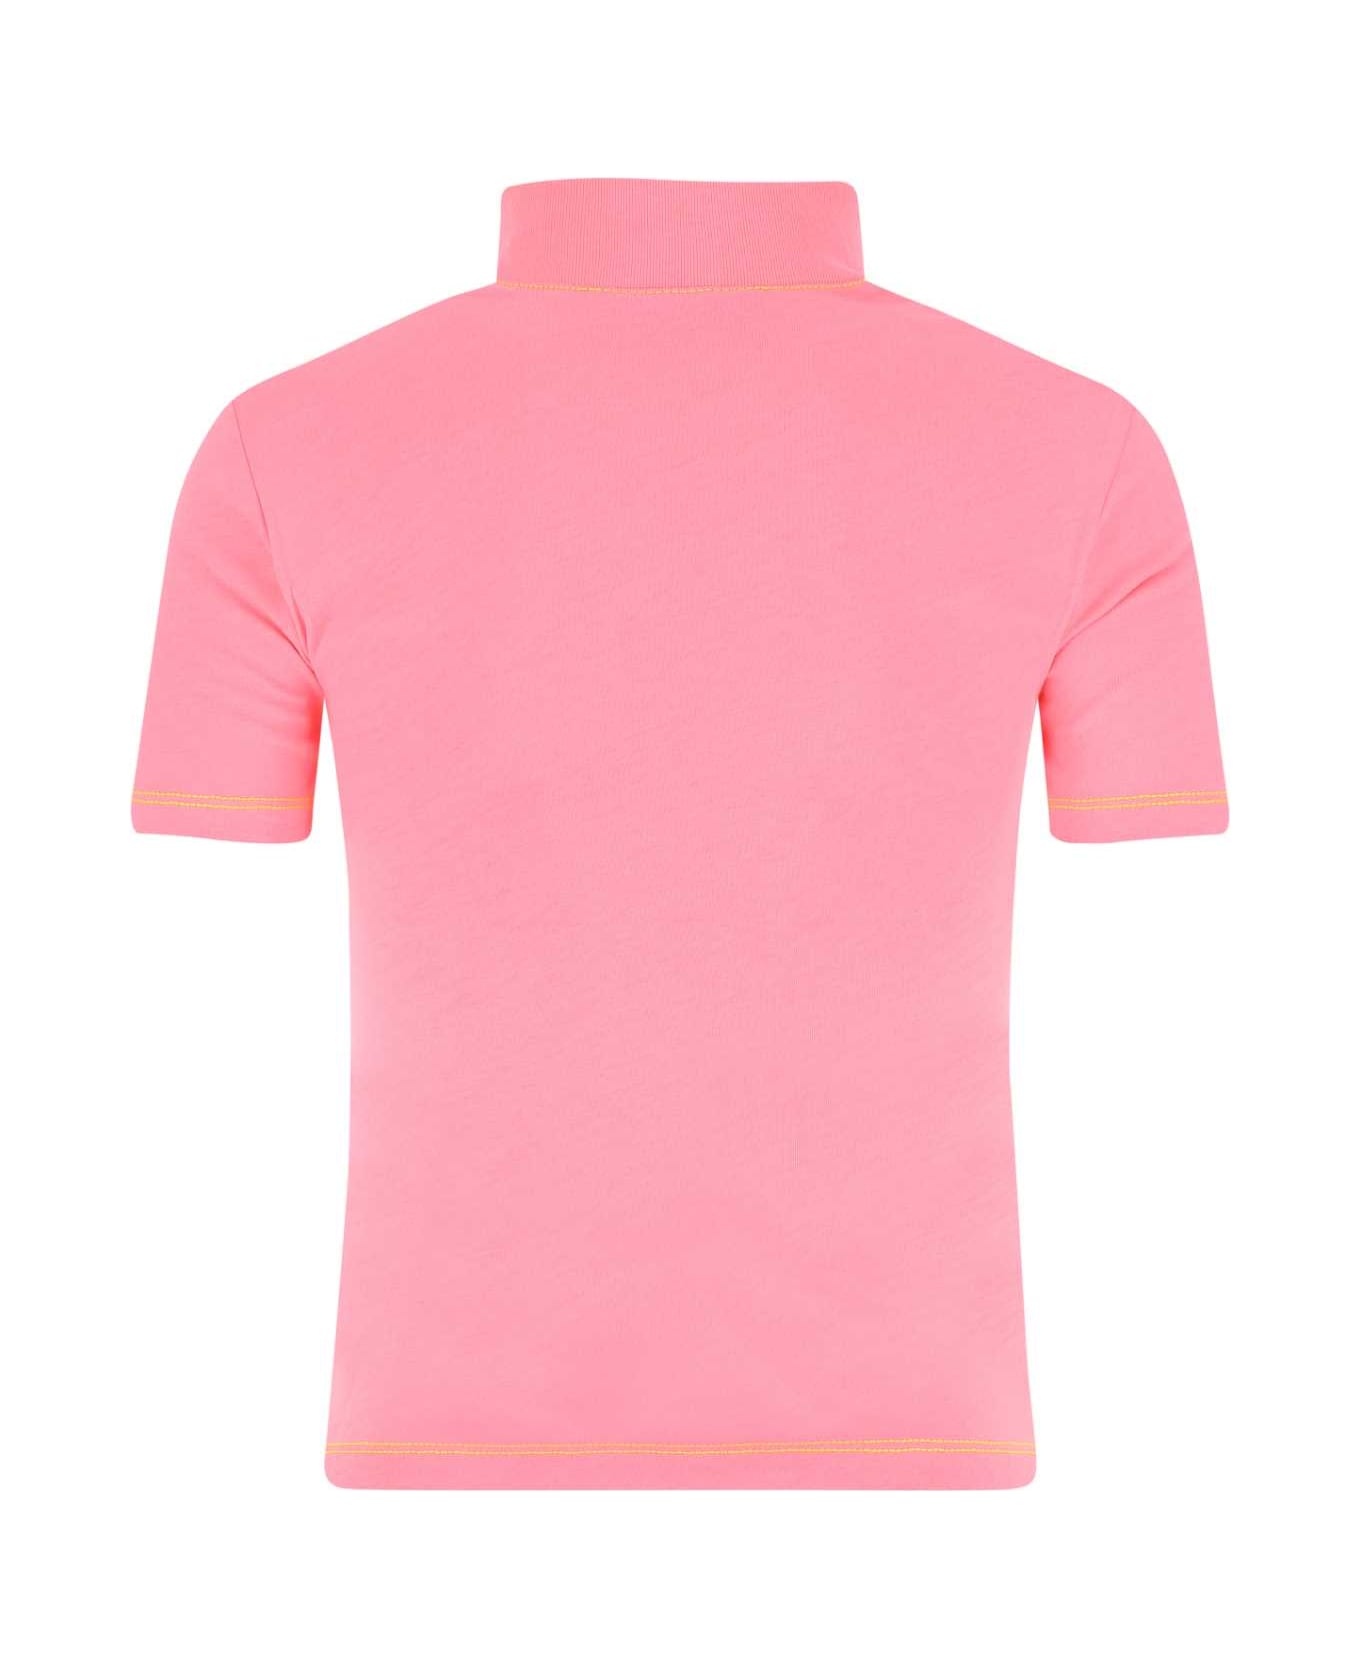 Chiara Ferragni Pink Cotton T-shirt - 414 ポロシャツ